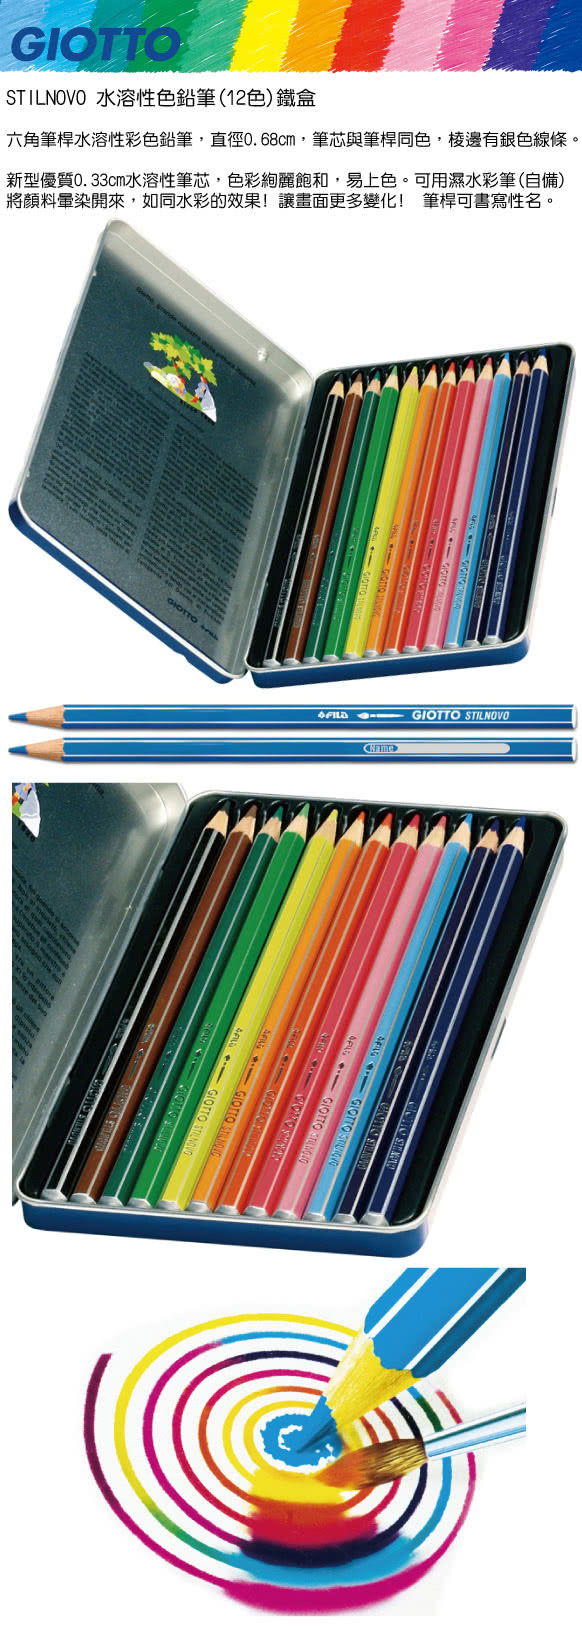 Momo購物網推薦的 義大利giotto Stilnovo 水溶性彩色鉛筆 12色鐵盒 優惠特價236元 網購編號